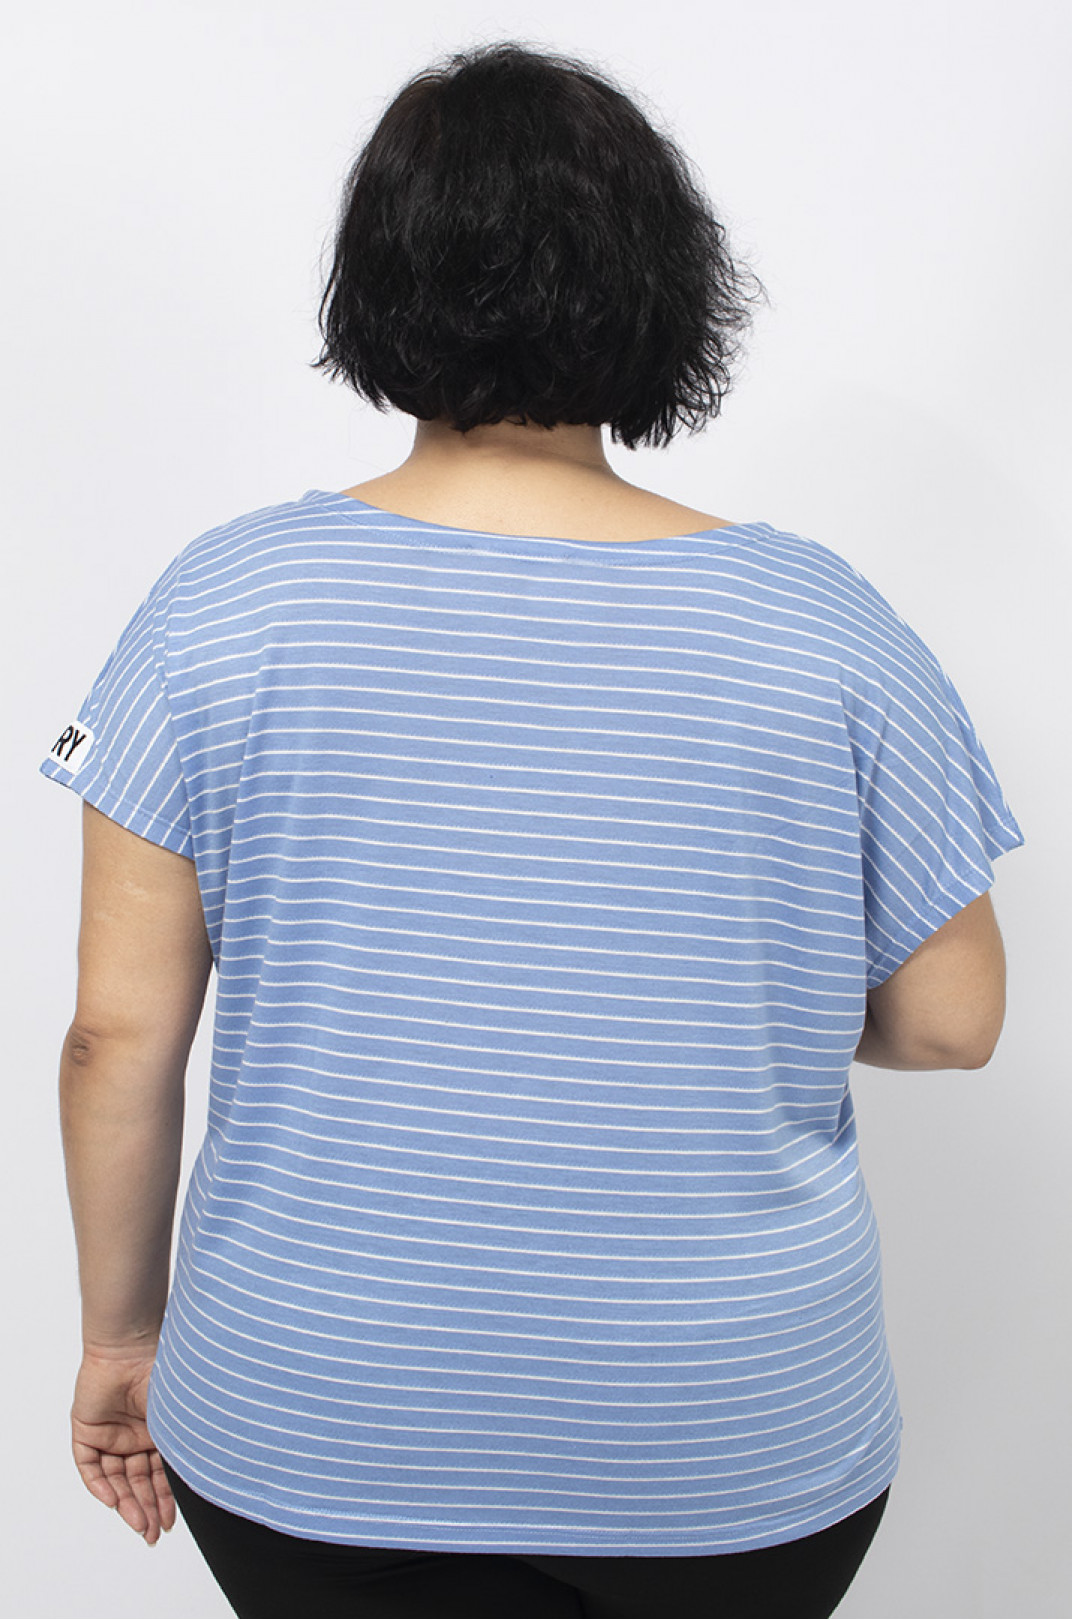 Коротка трикотажна футболка в кольорову горизонтальну смужку супер батал